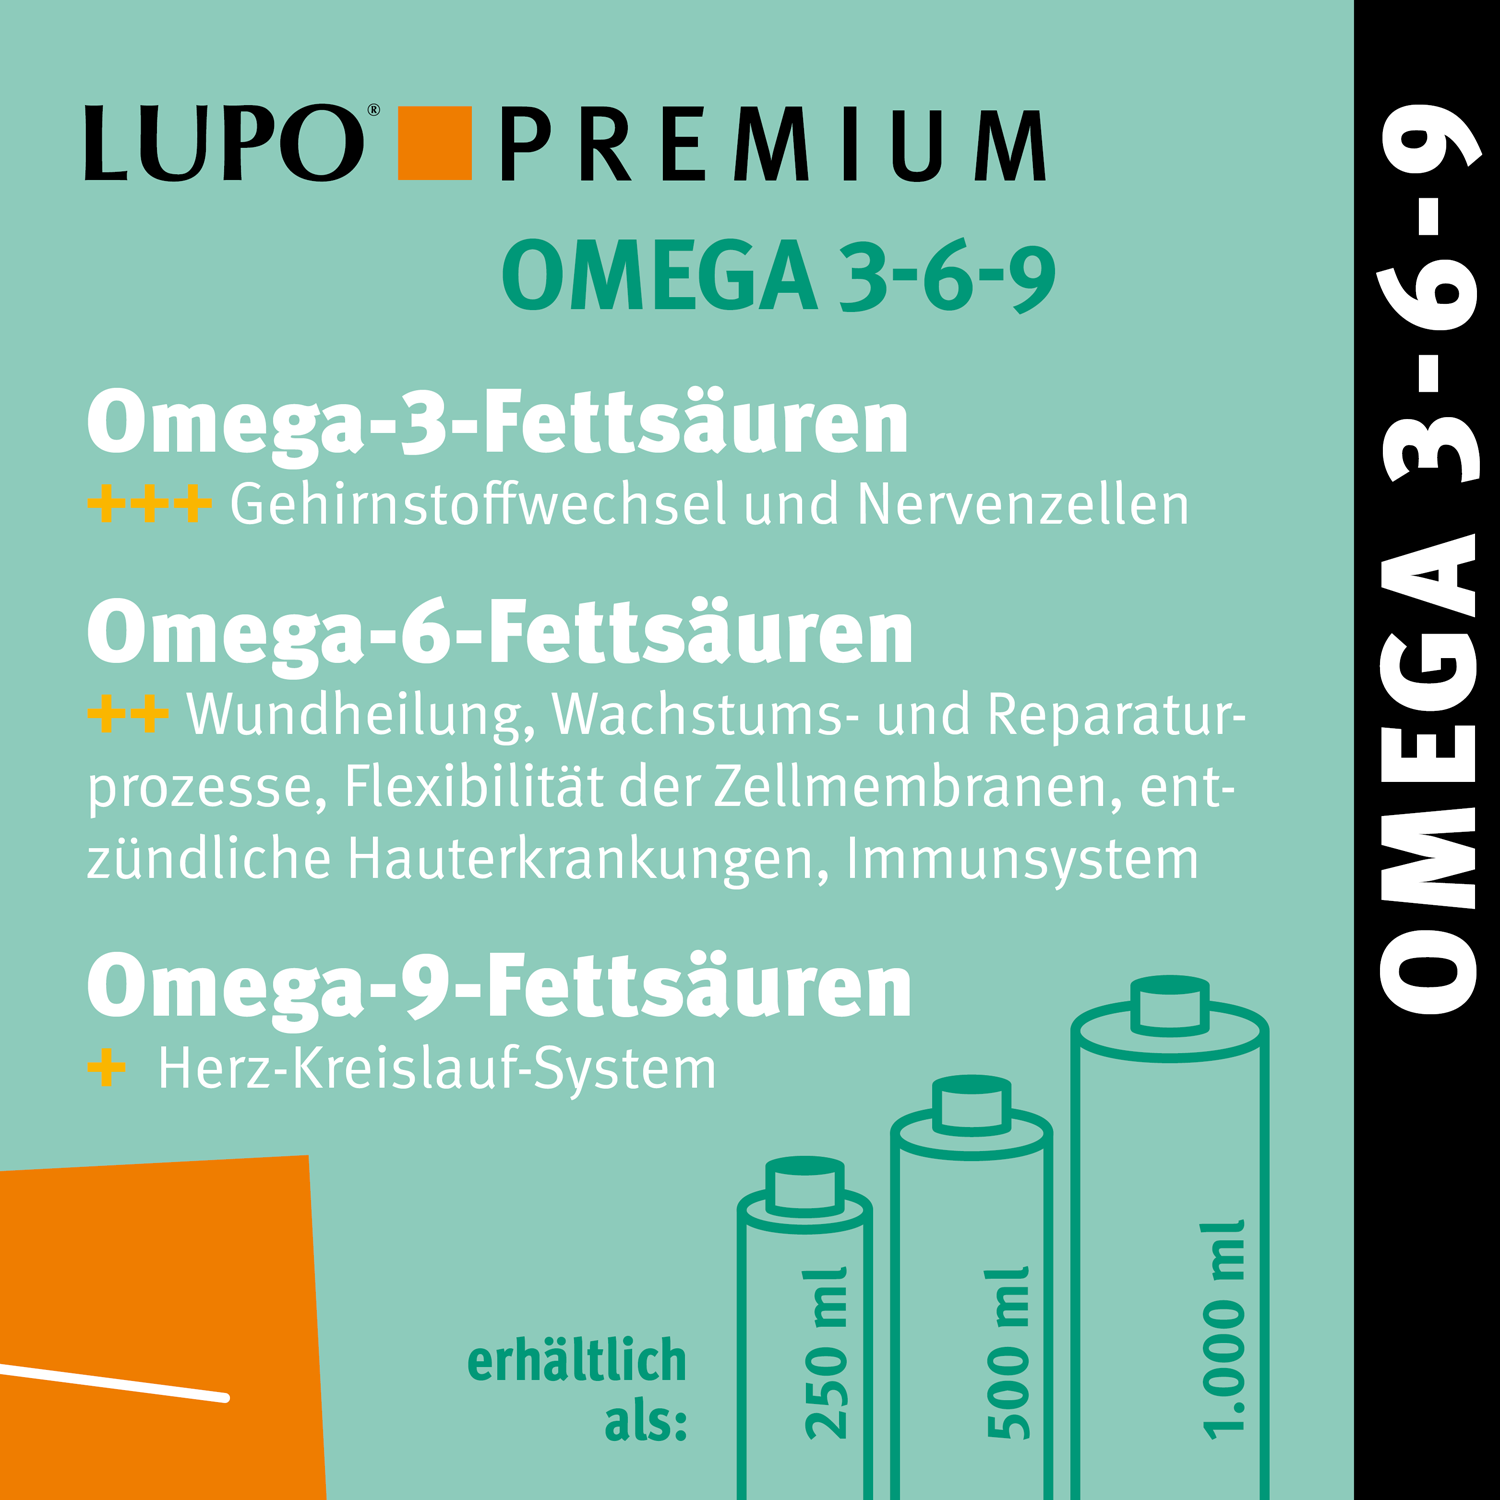 LUPO OMEGA 369 Premium 500 ml